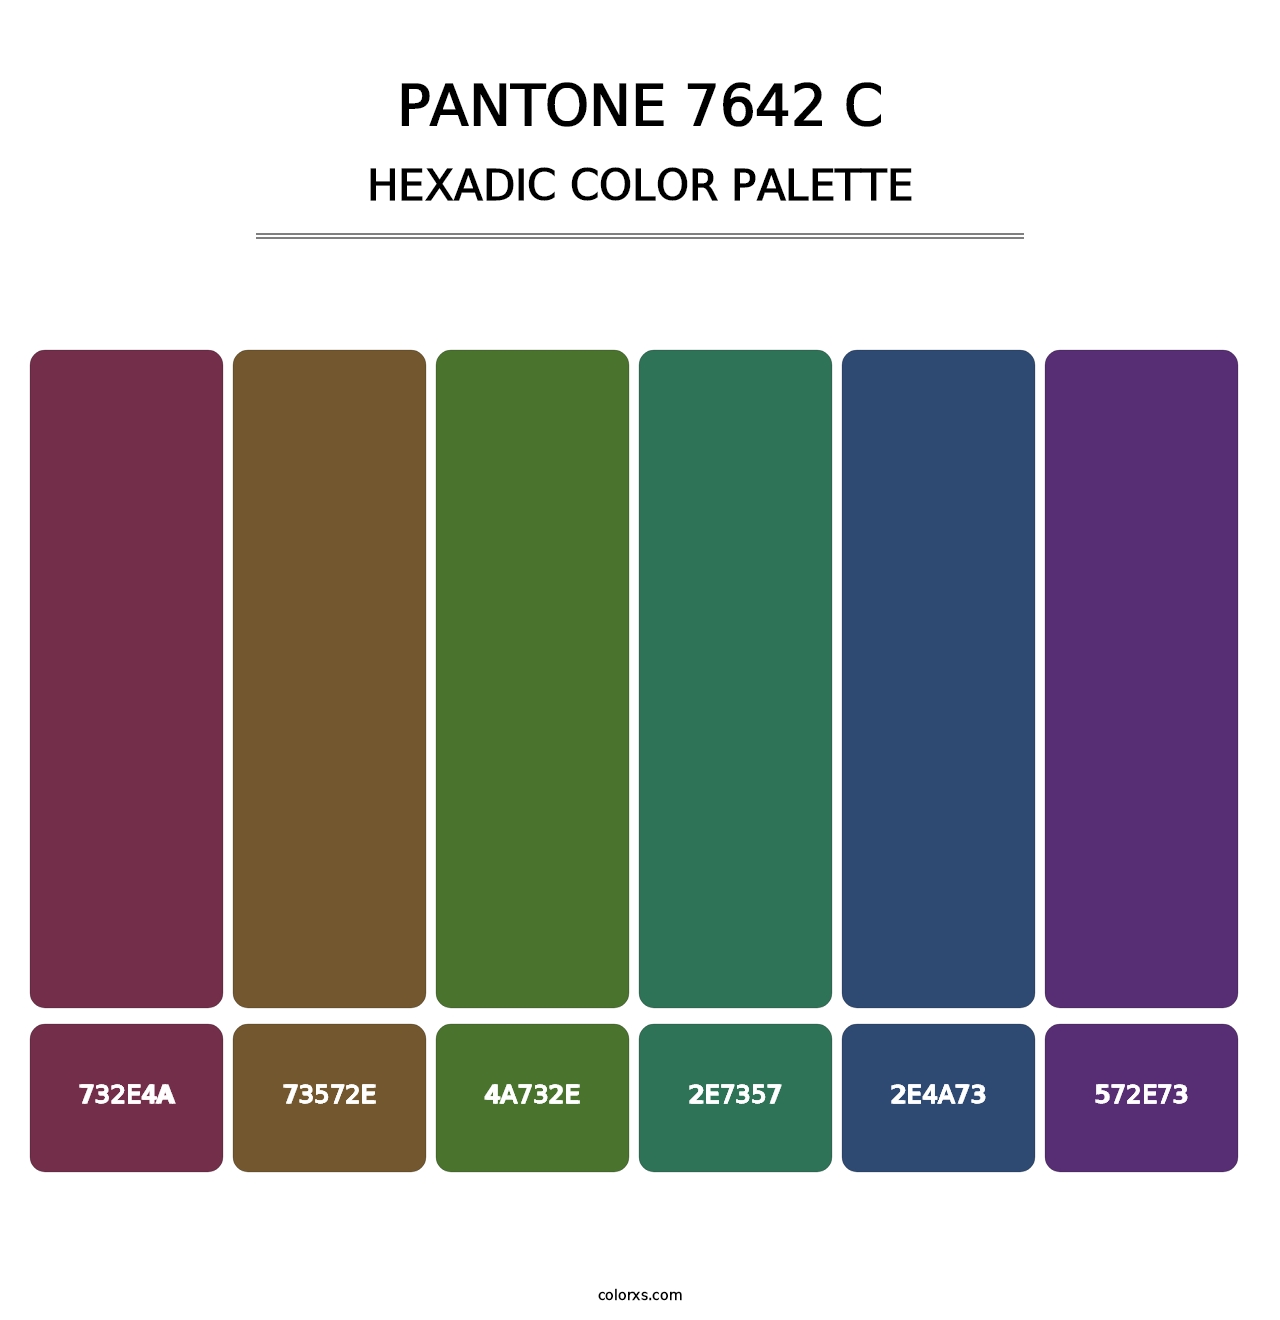 PANTONE 7642 C - Hexadic Color Palette